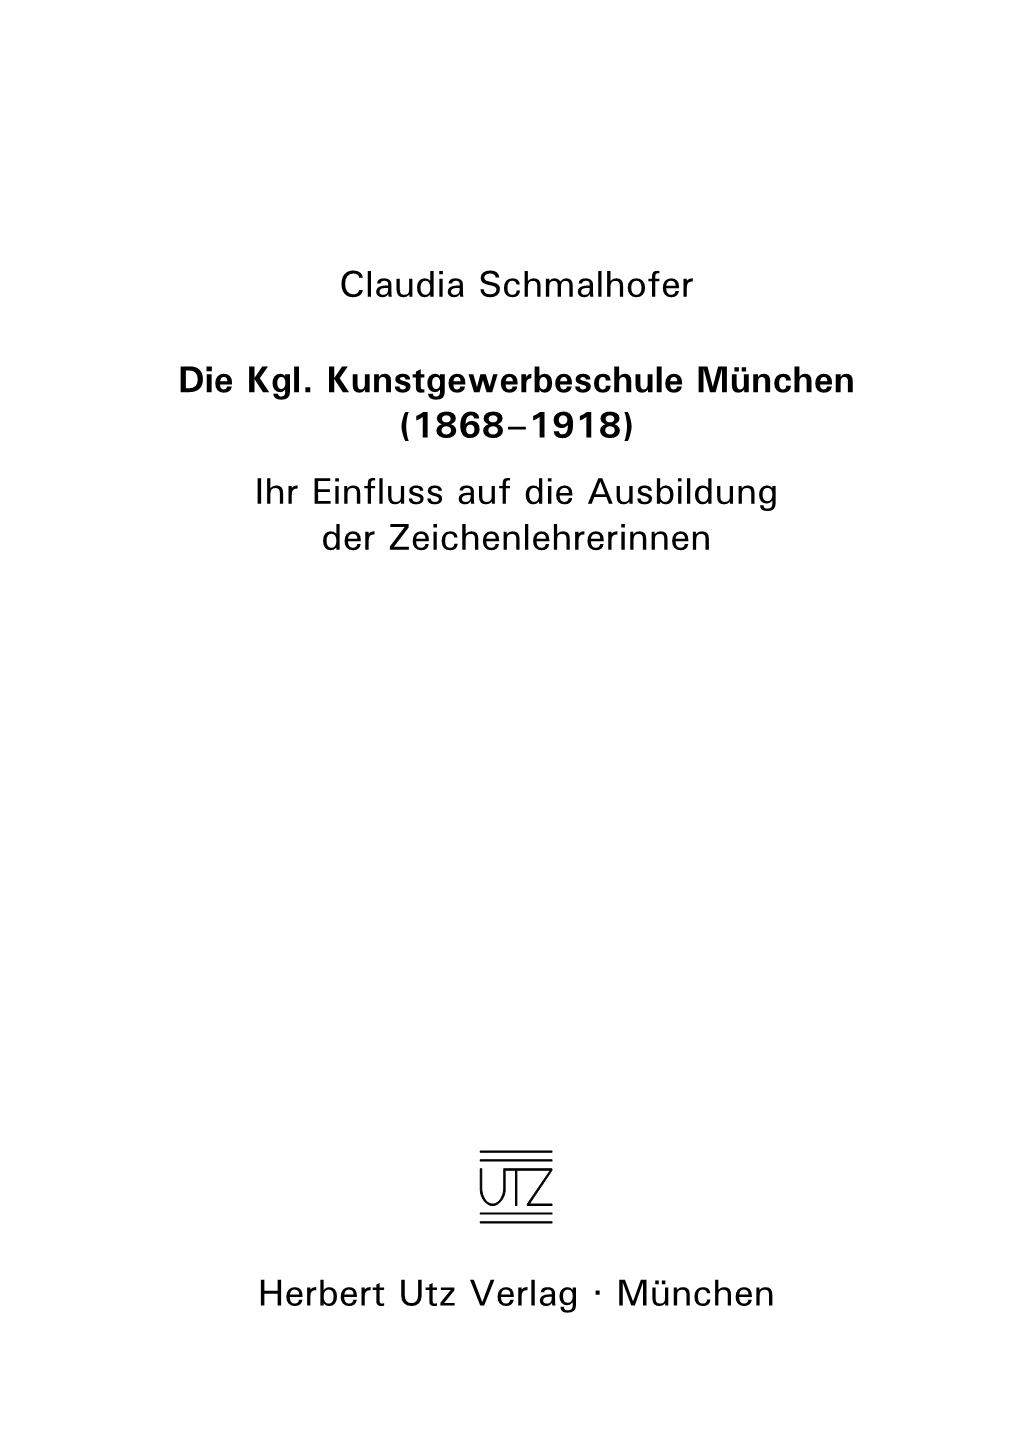 Claudia Schmalhofer Die Kgl. Kunstgewerbeschule München